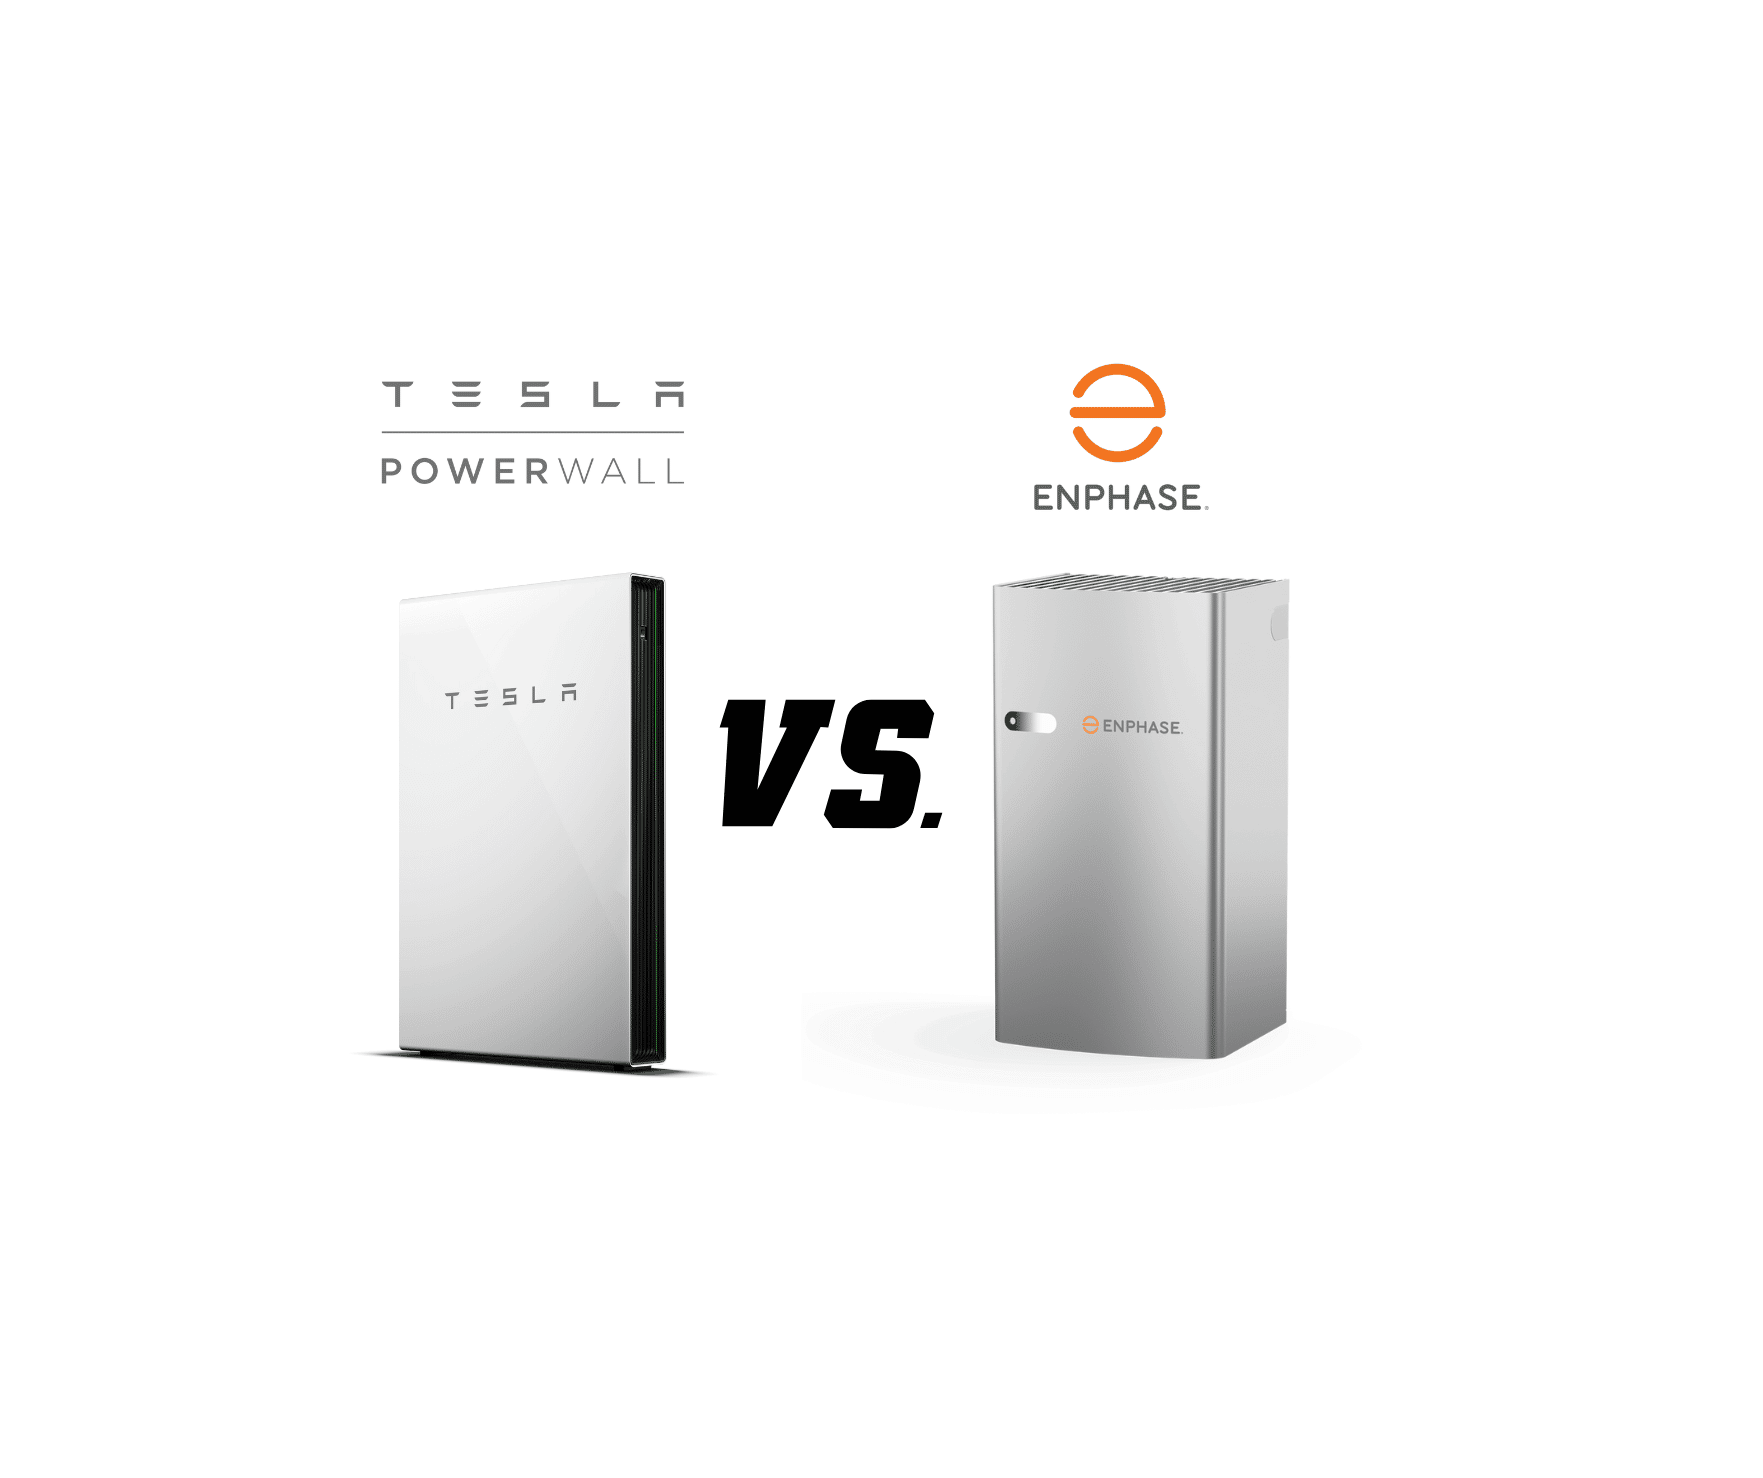 tesla-powerwall-vs-enphase-battery-nrg-clean-power